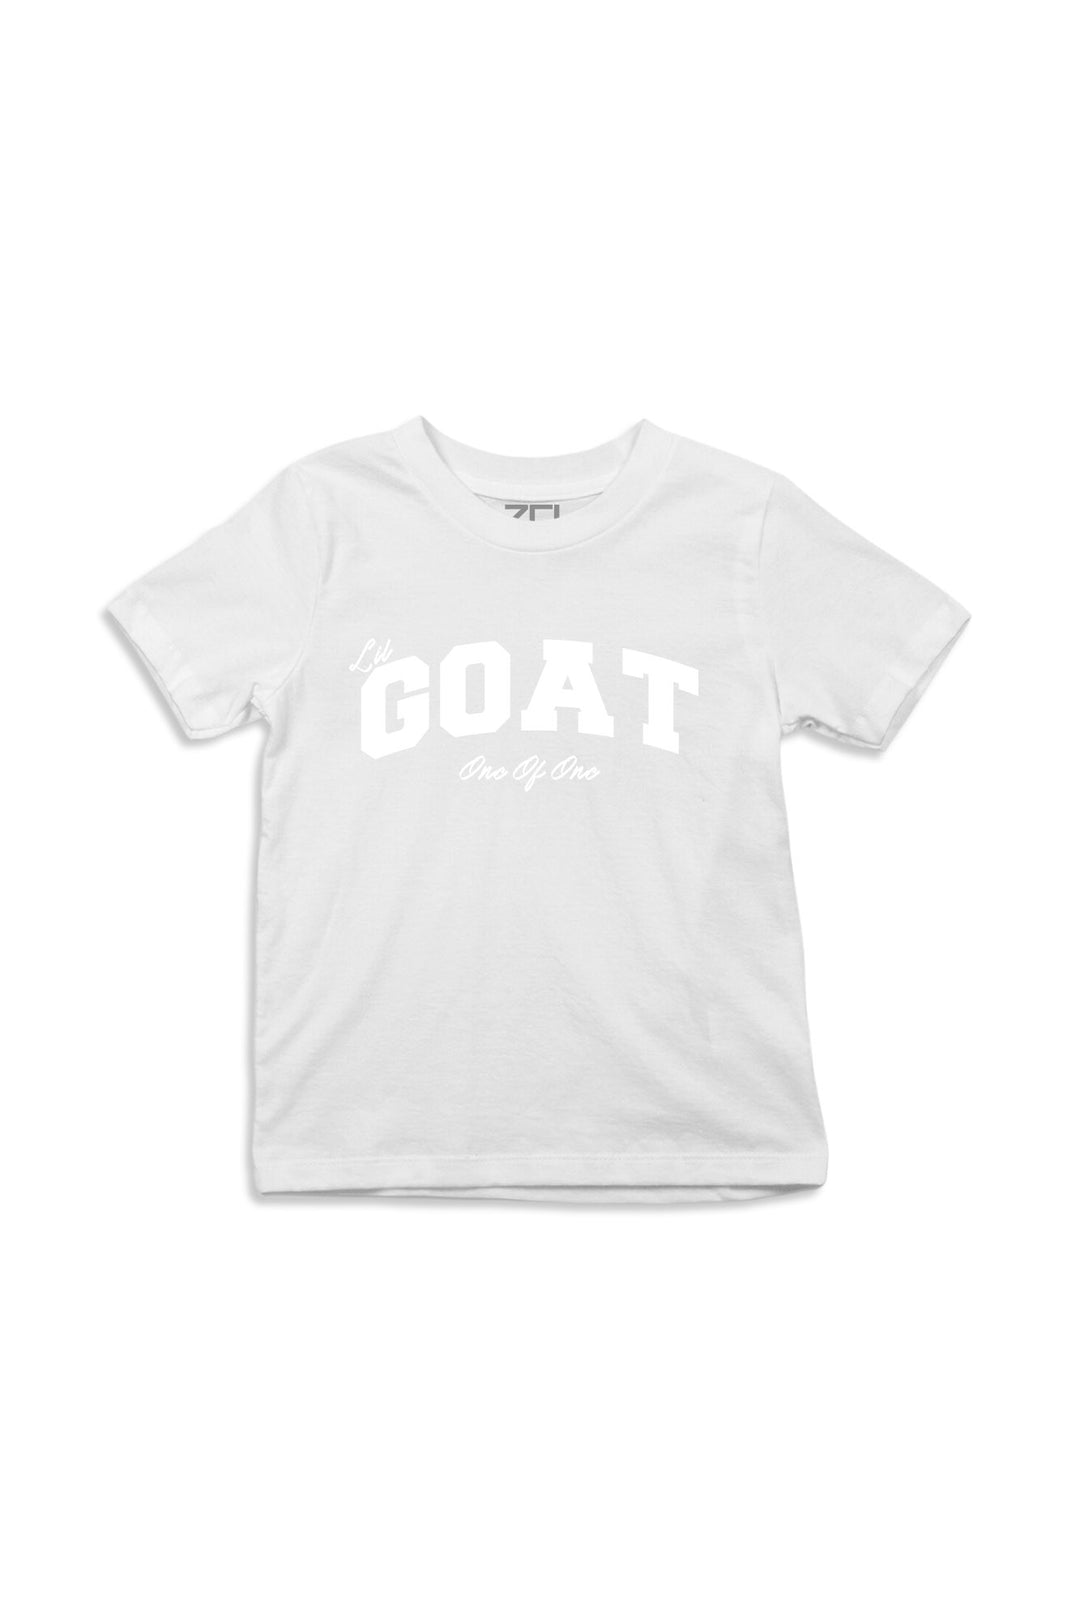 Kids Lil Goat Tee (White Logo) - Zamage